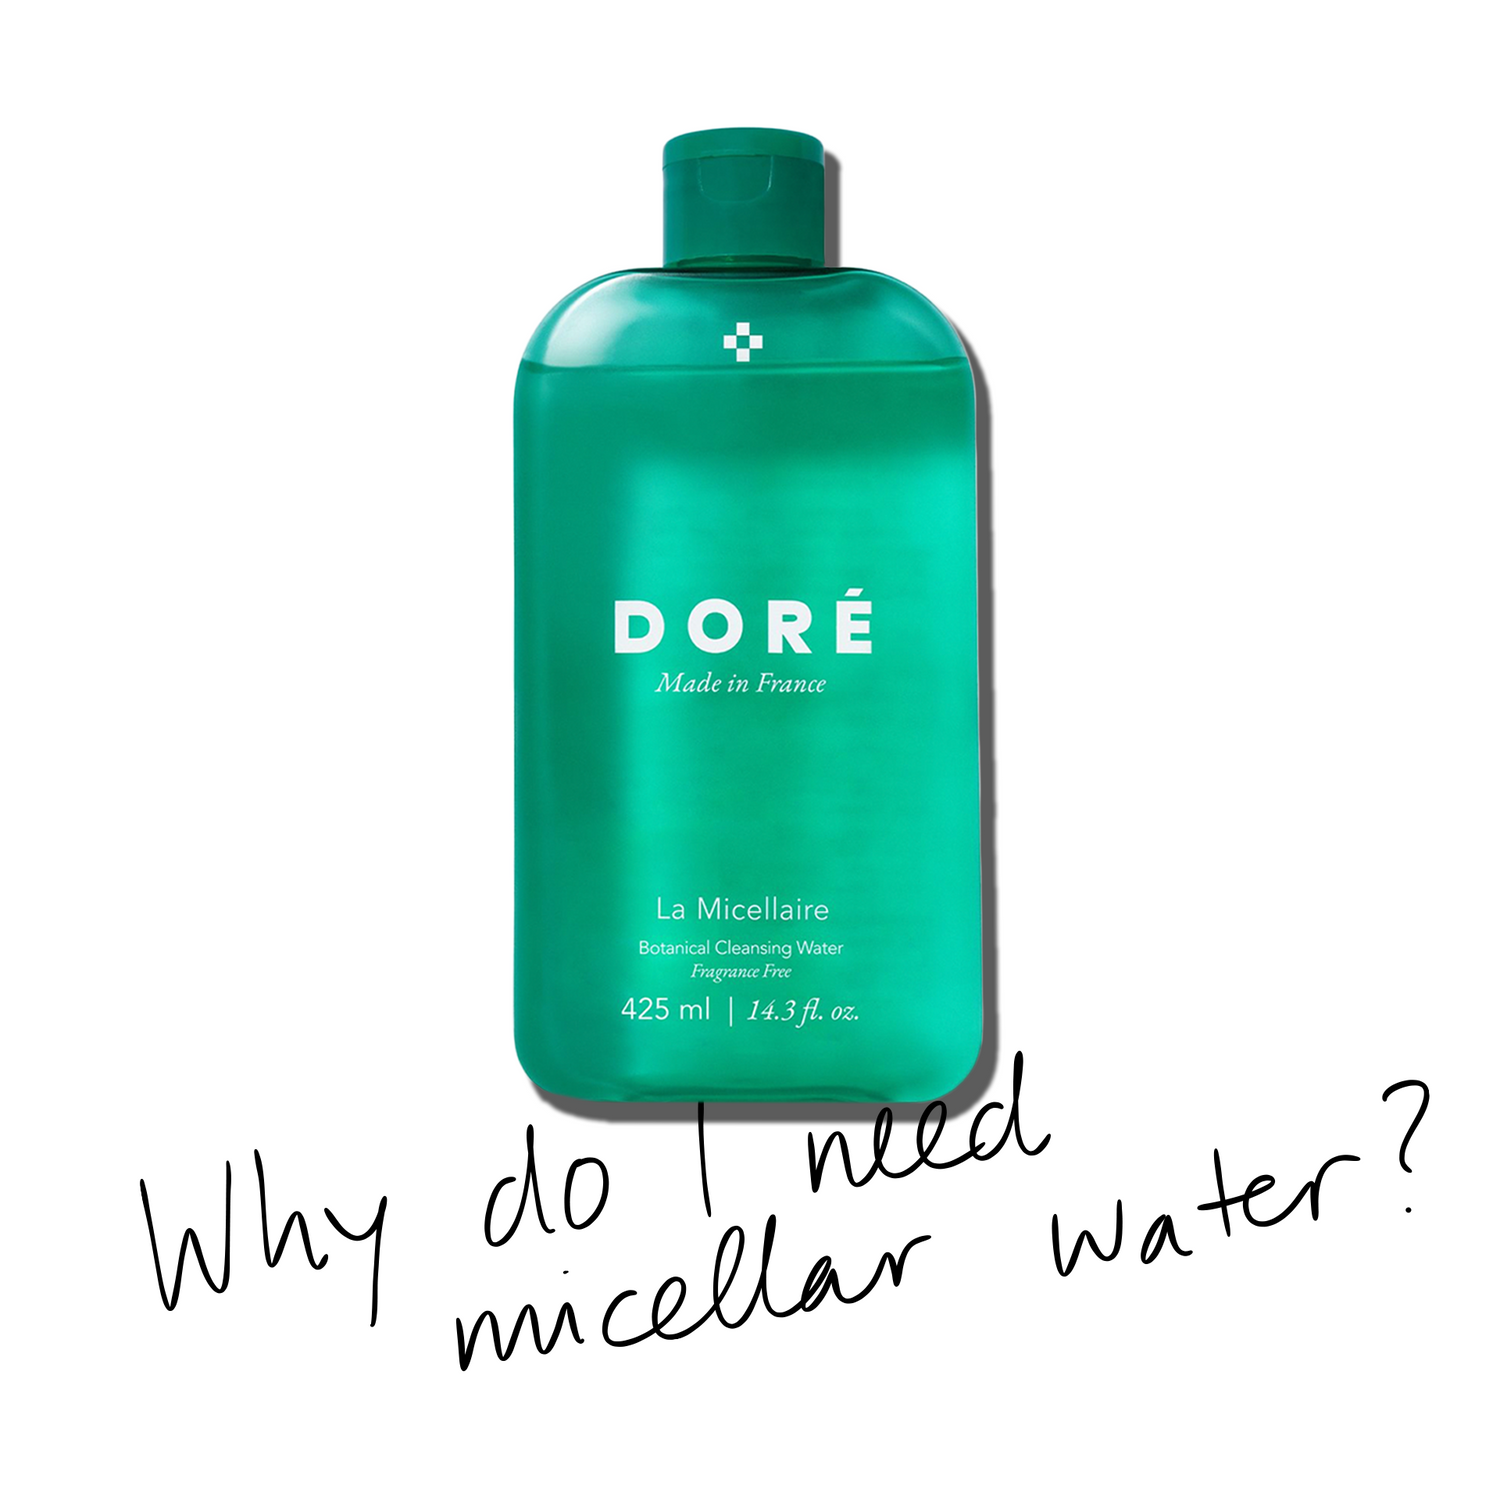 Why do I need micellar water?